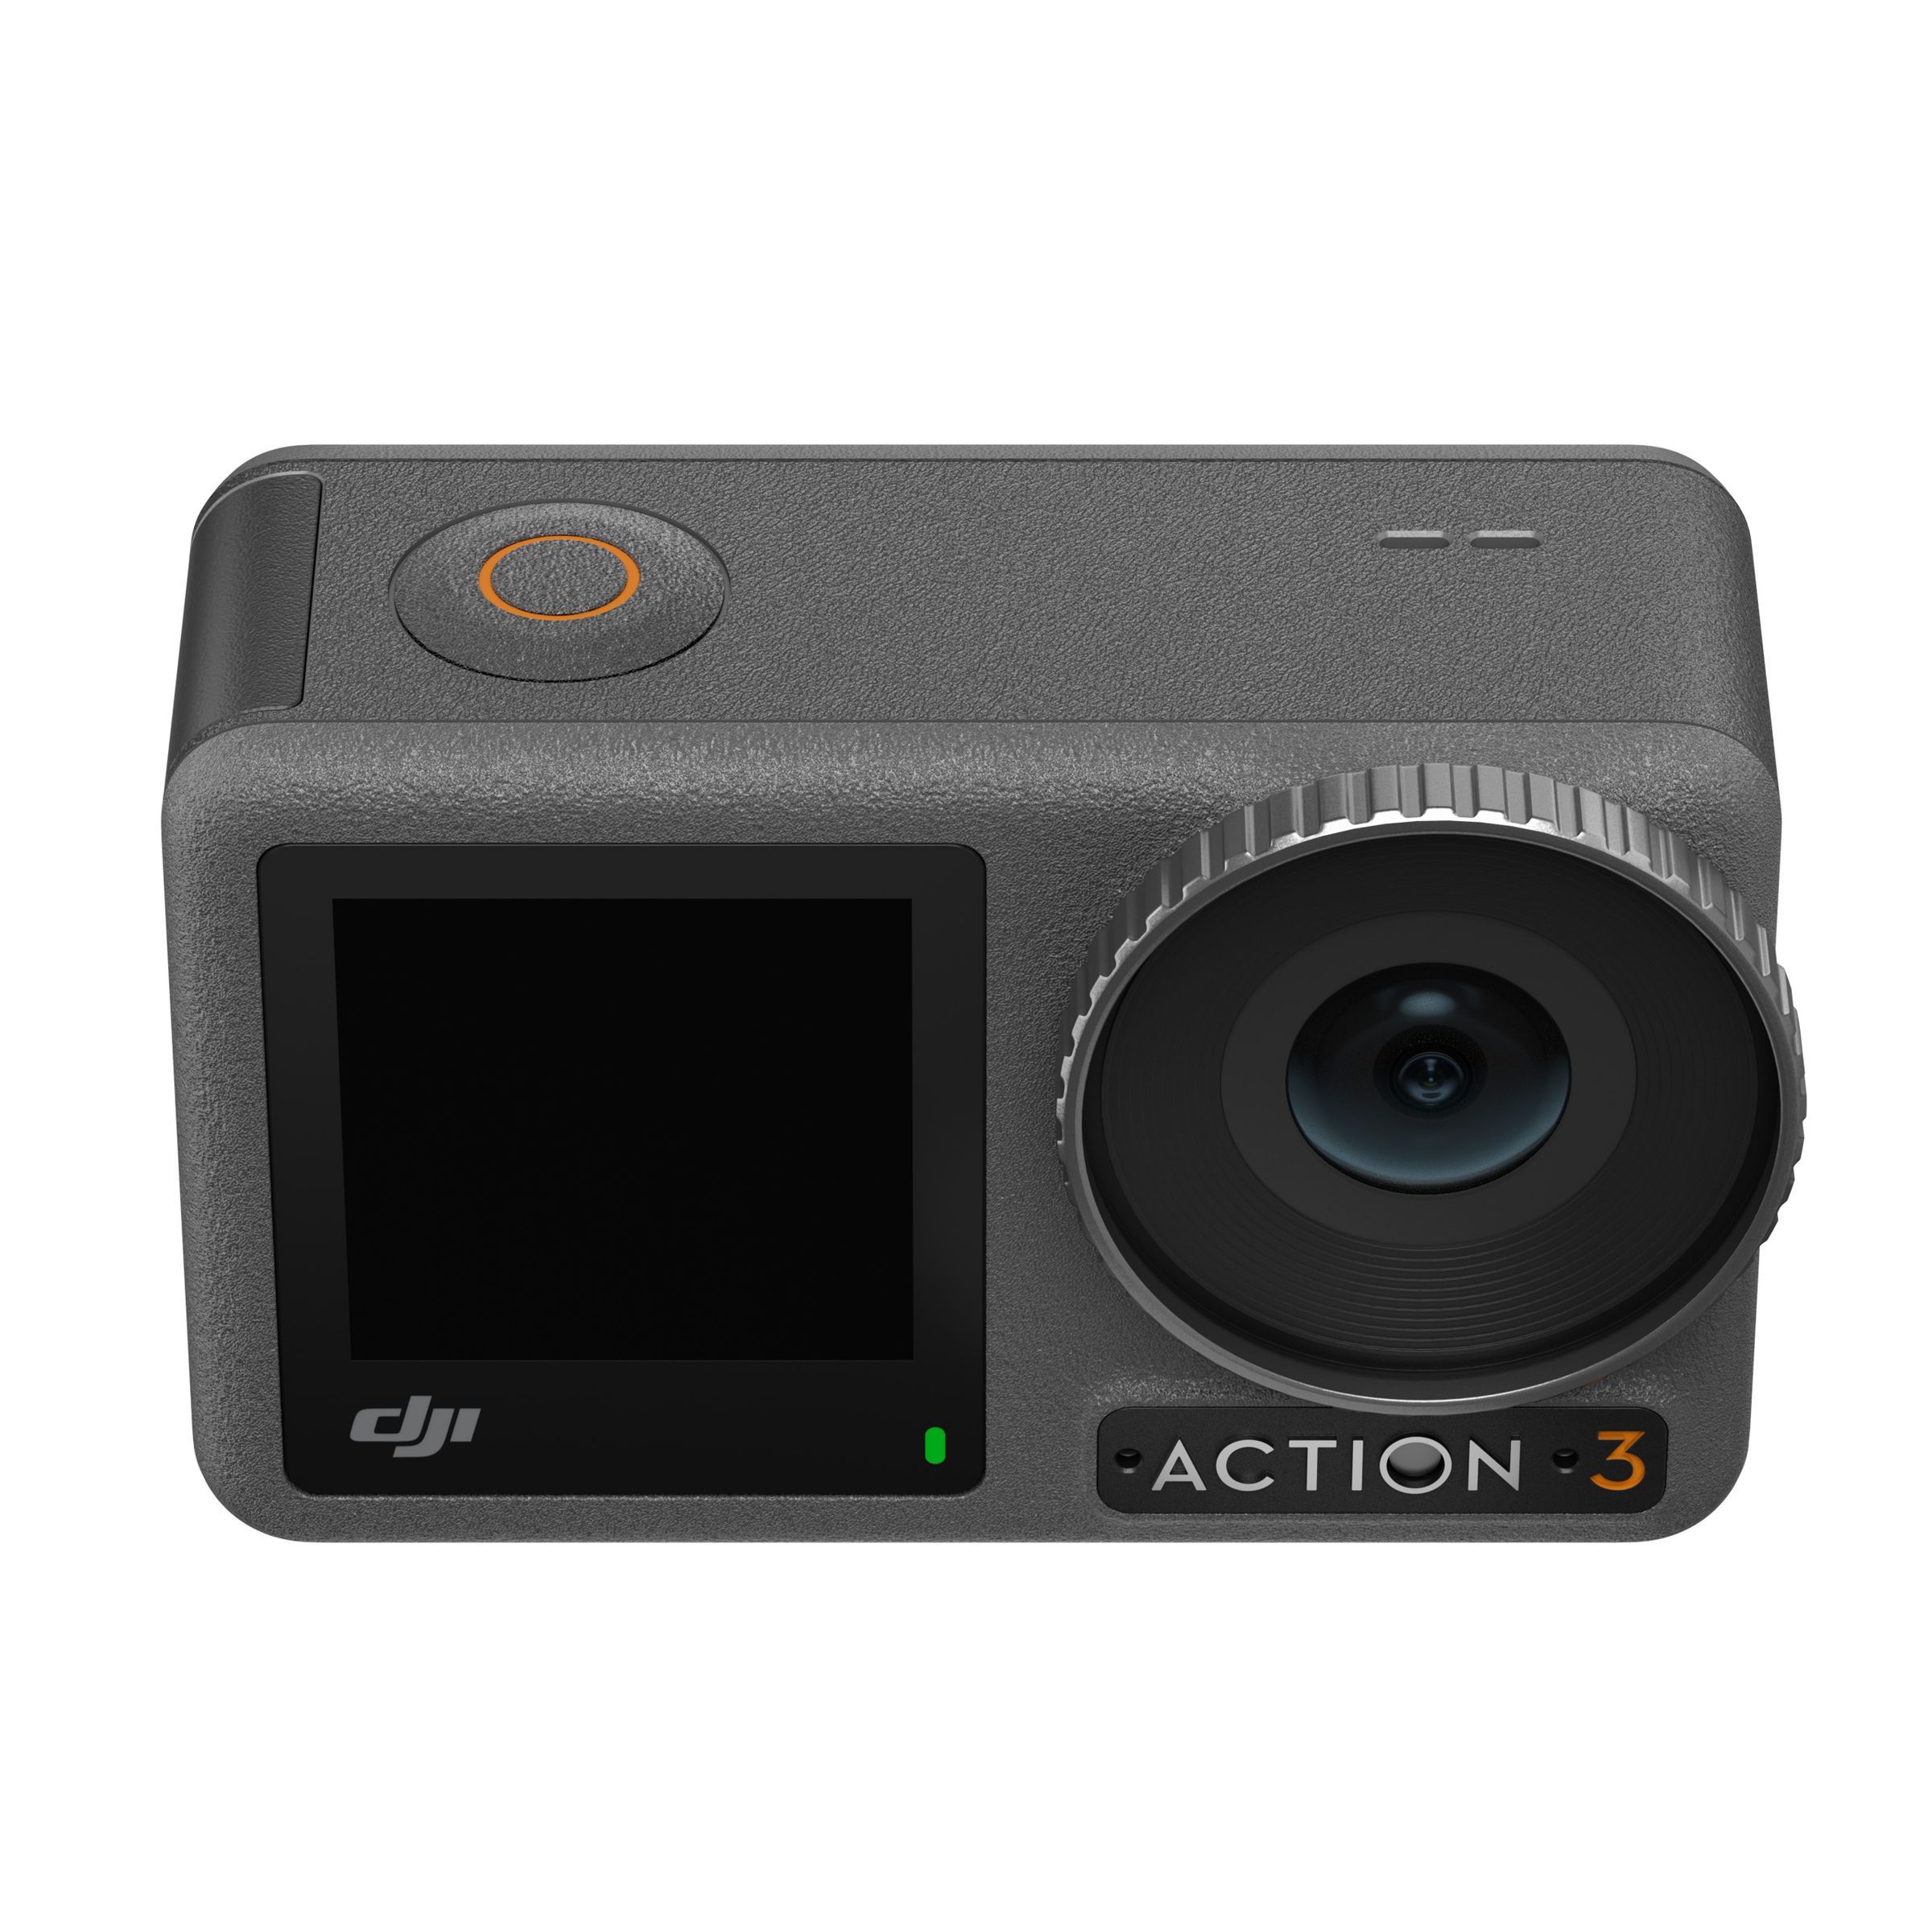 <em>Product shots of the DJI Osmo Action 3 show a similar design to the original DJI Osmo action camera.</em>